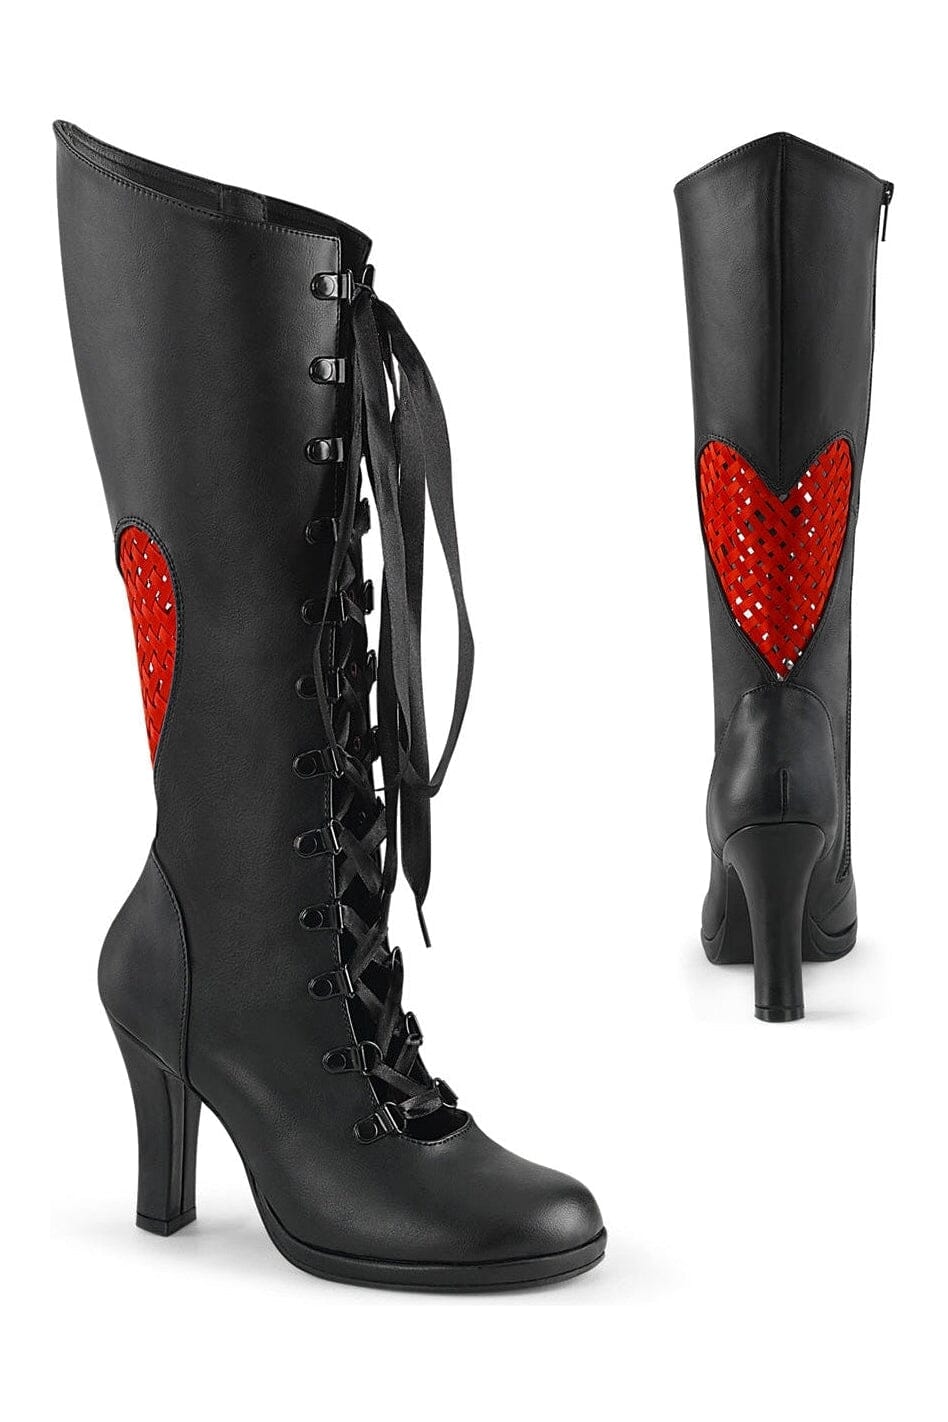 GLAM-243 Black Vegan Leather Knee Boot-Knee Boots-Demonia-Black-10-Vegan Leather-SEXYSHOES.COM